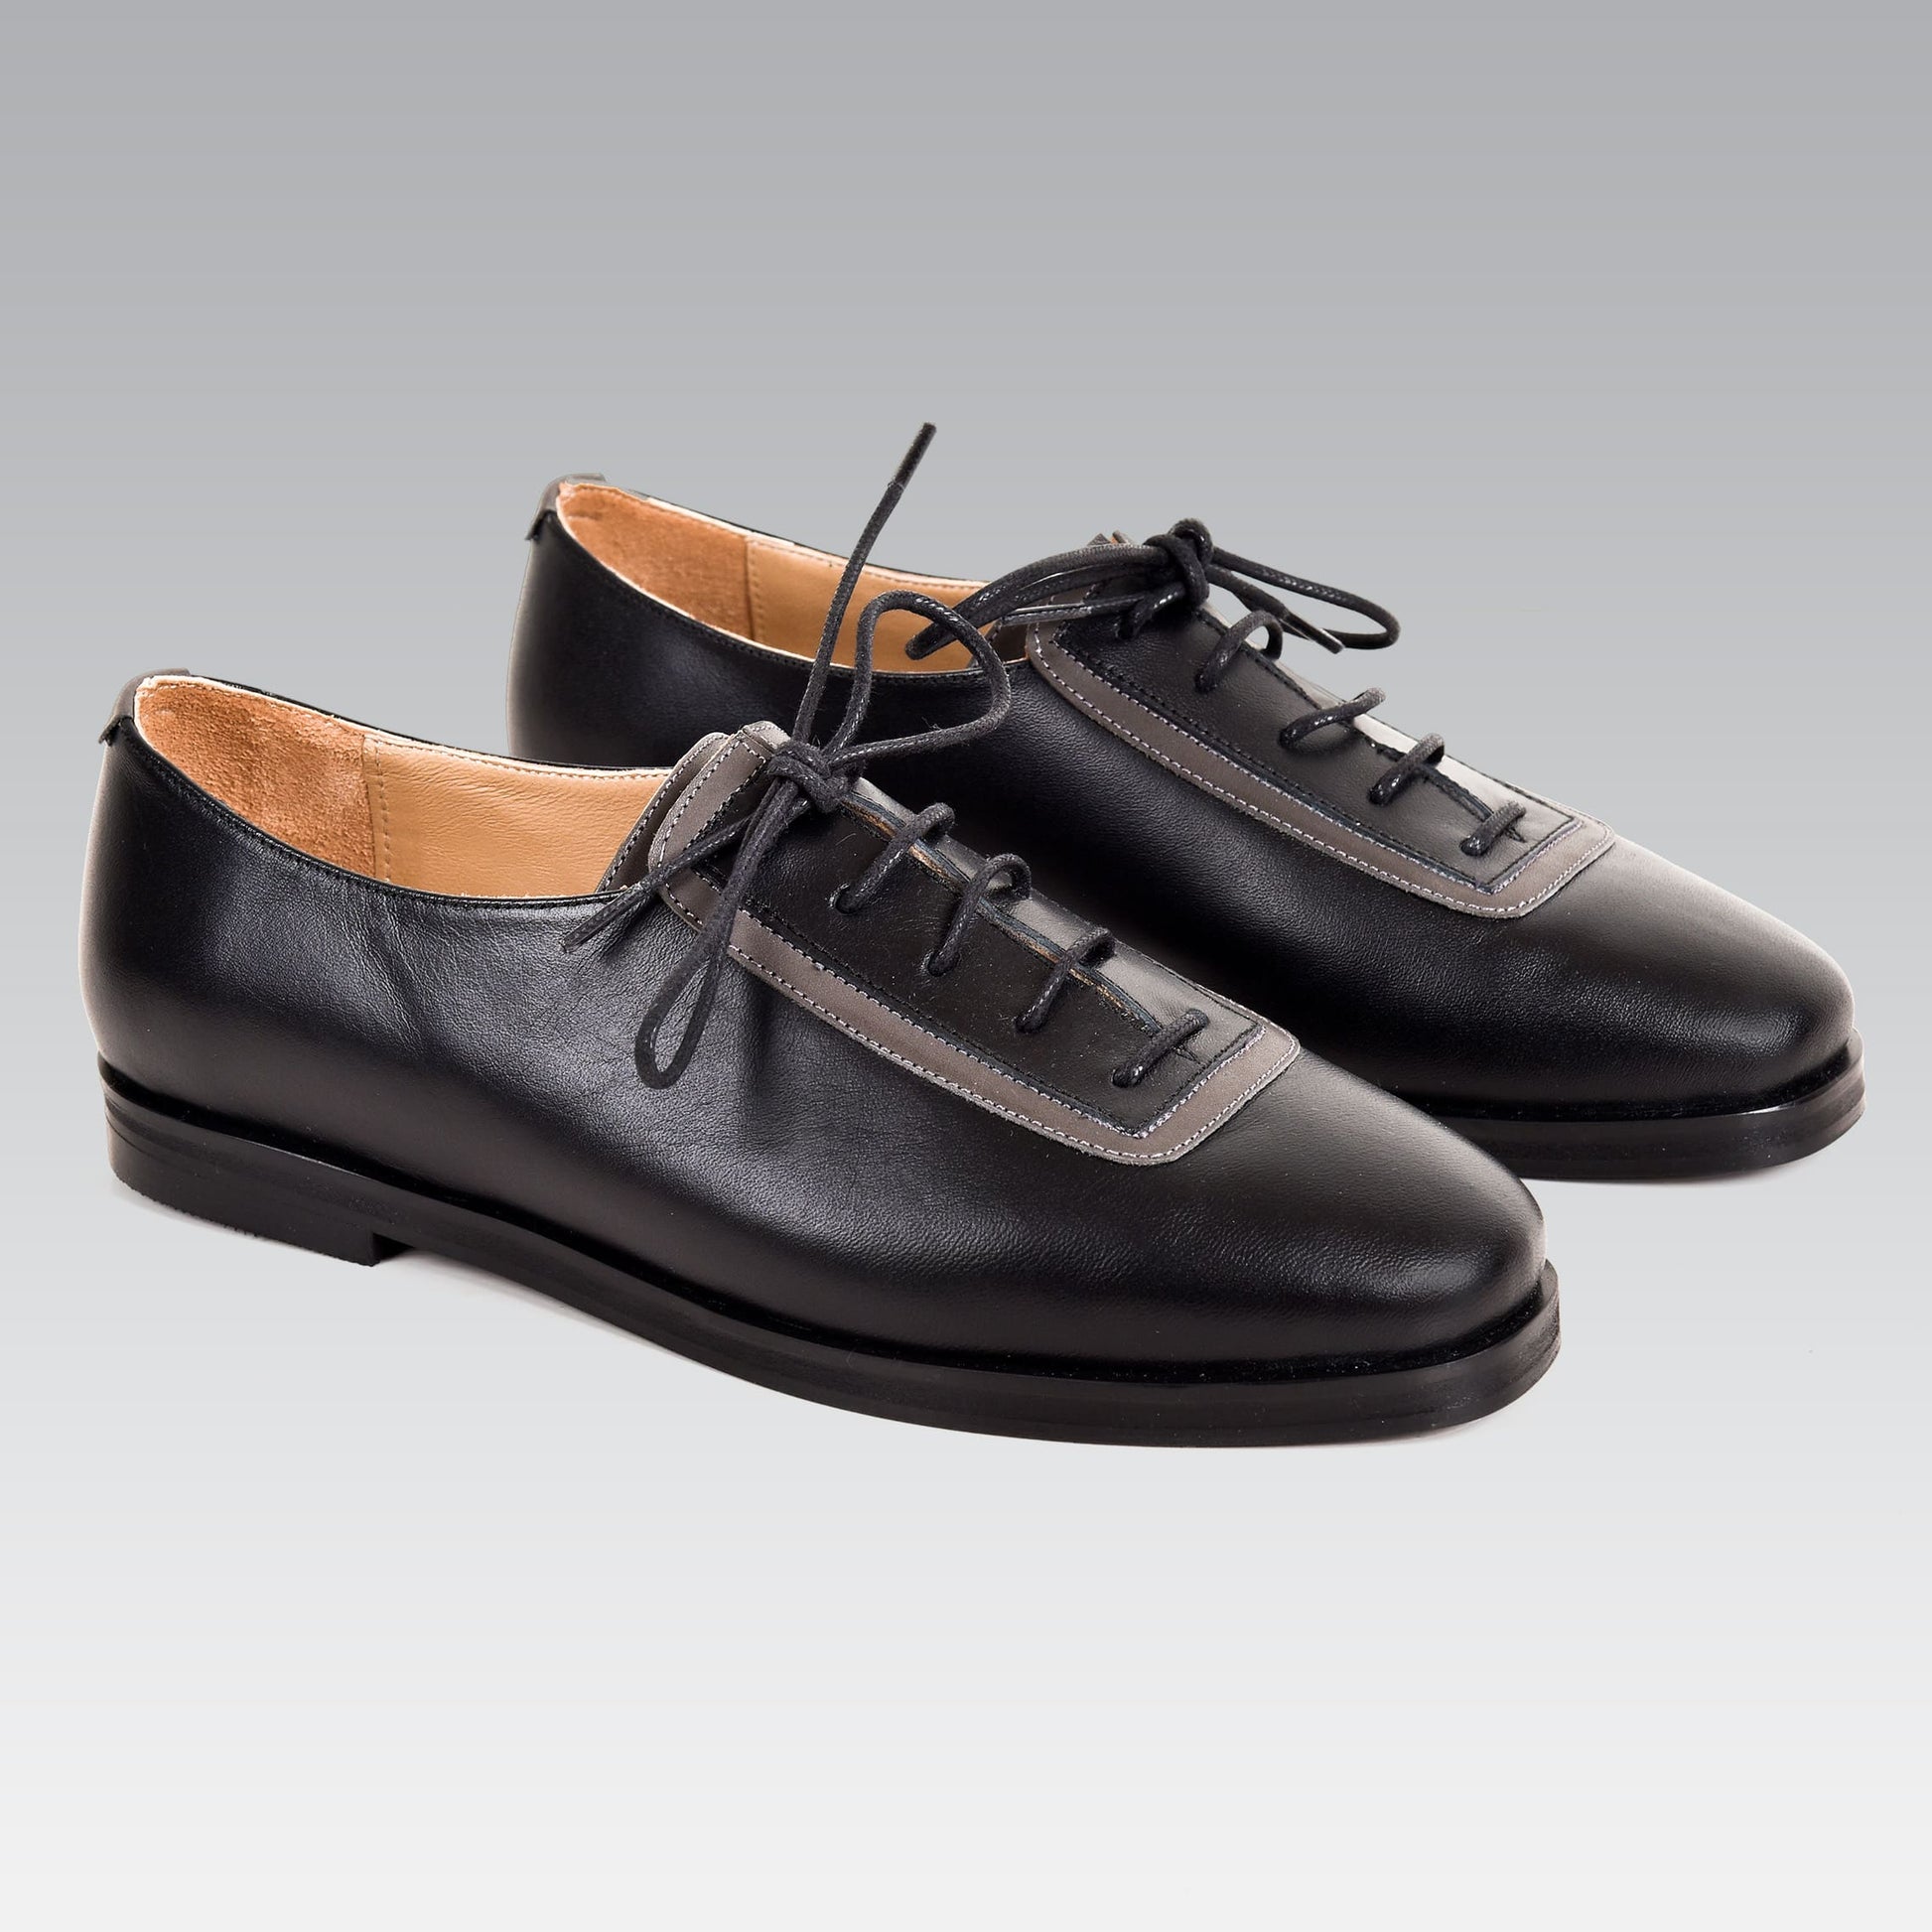 Black genuine leather handmade shoes